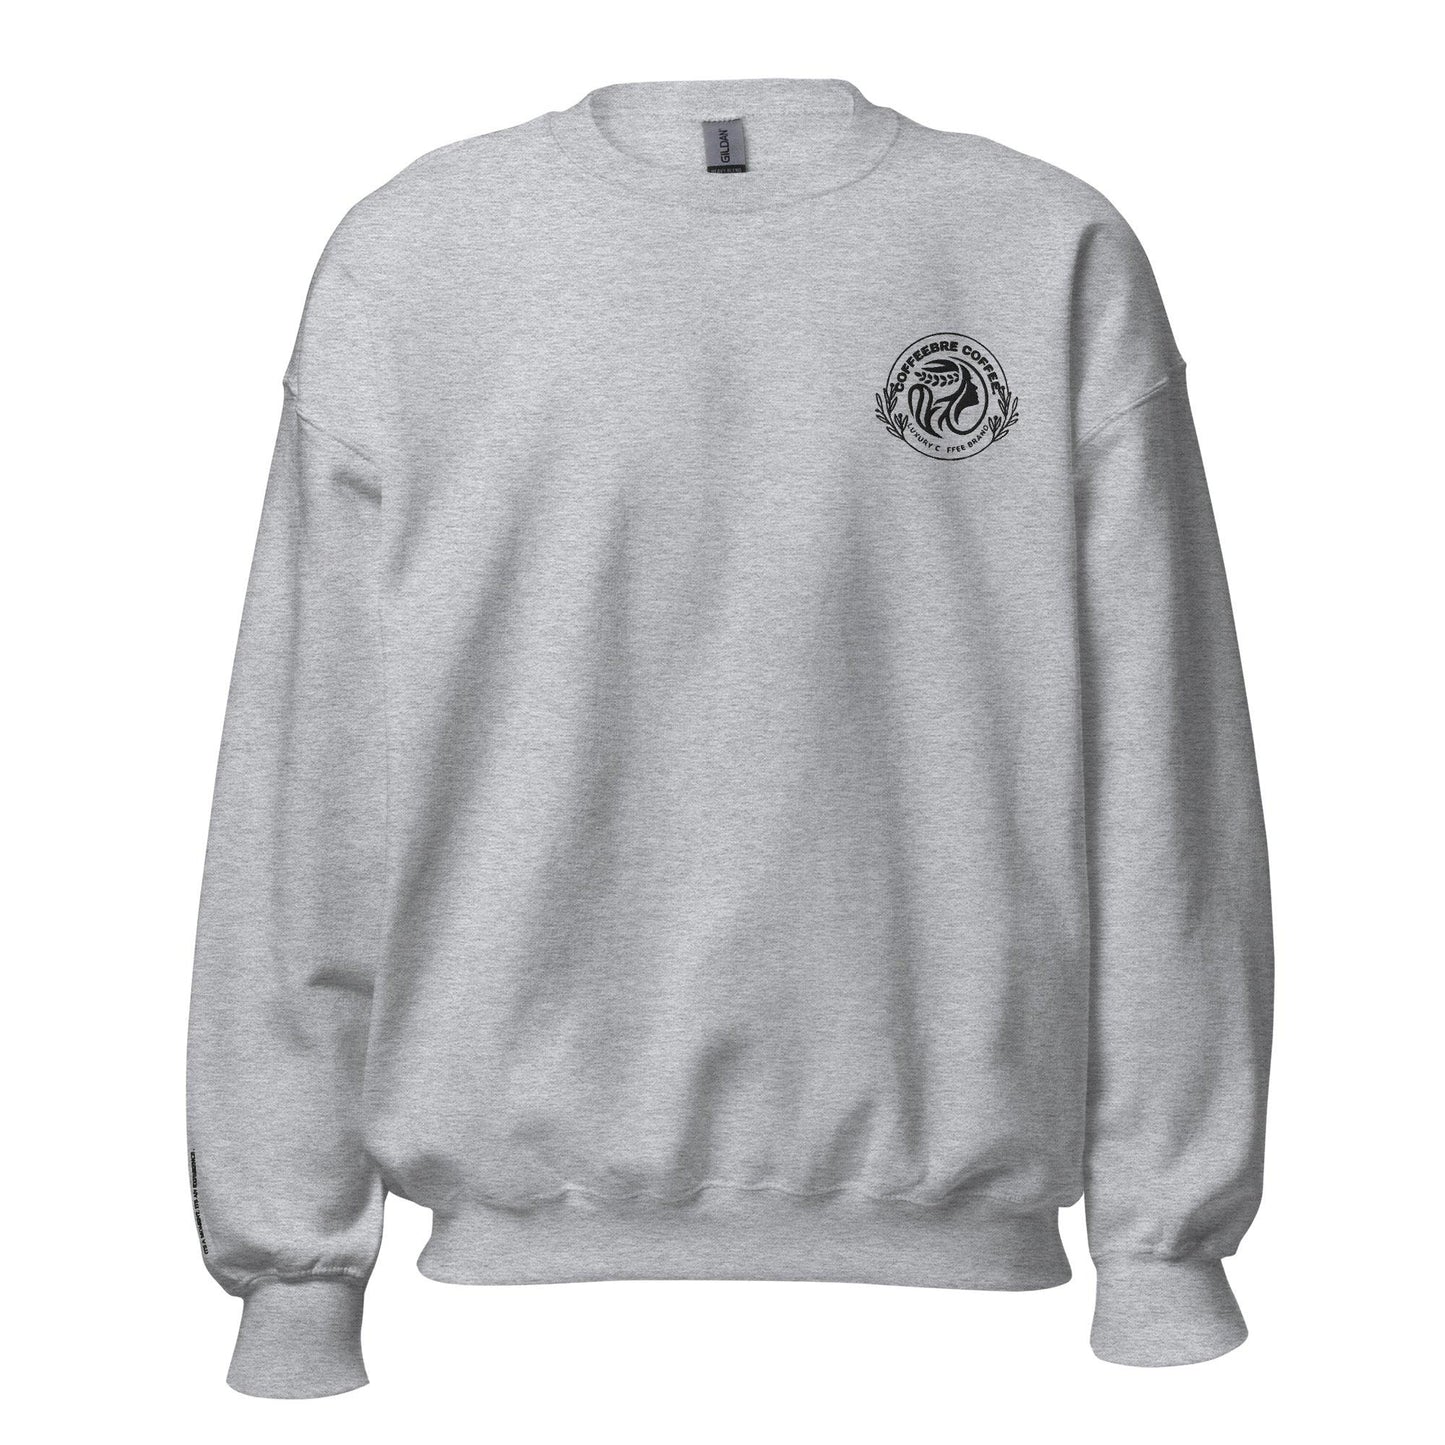 Unisex Embroidery Crew Neck Sweatshirt - COFFEEBRE